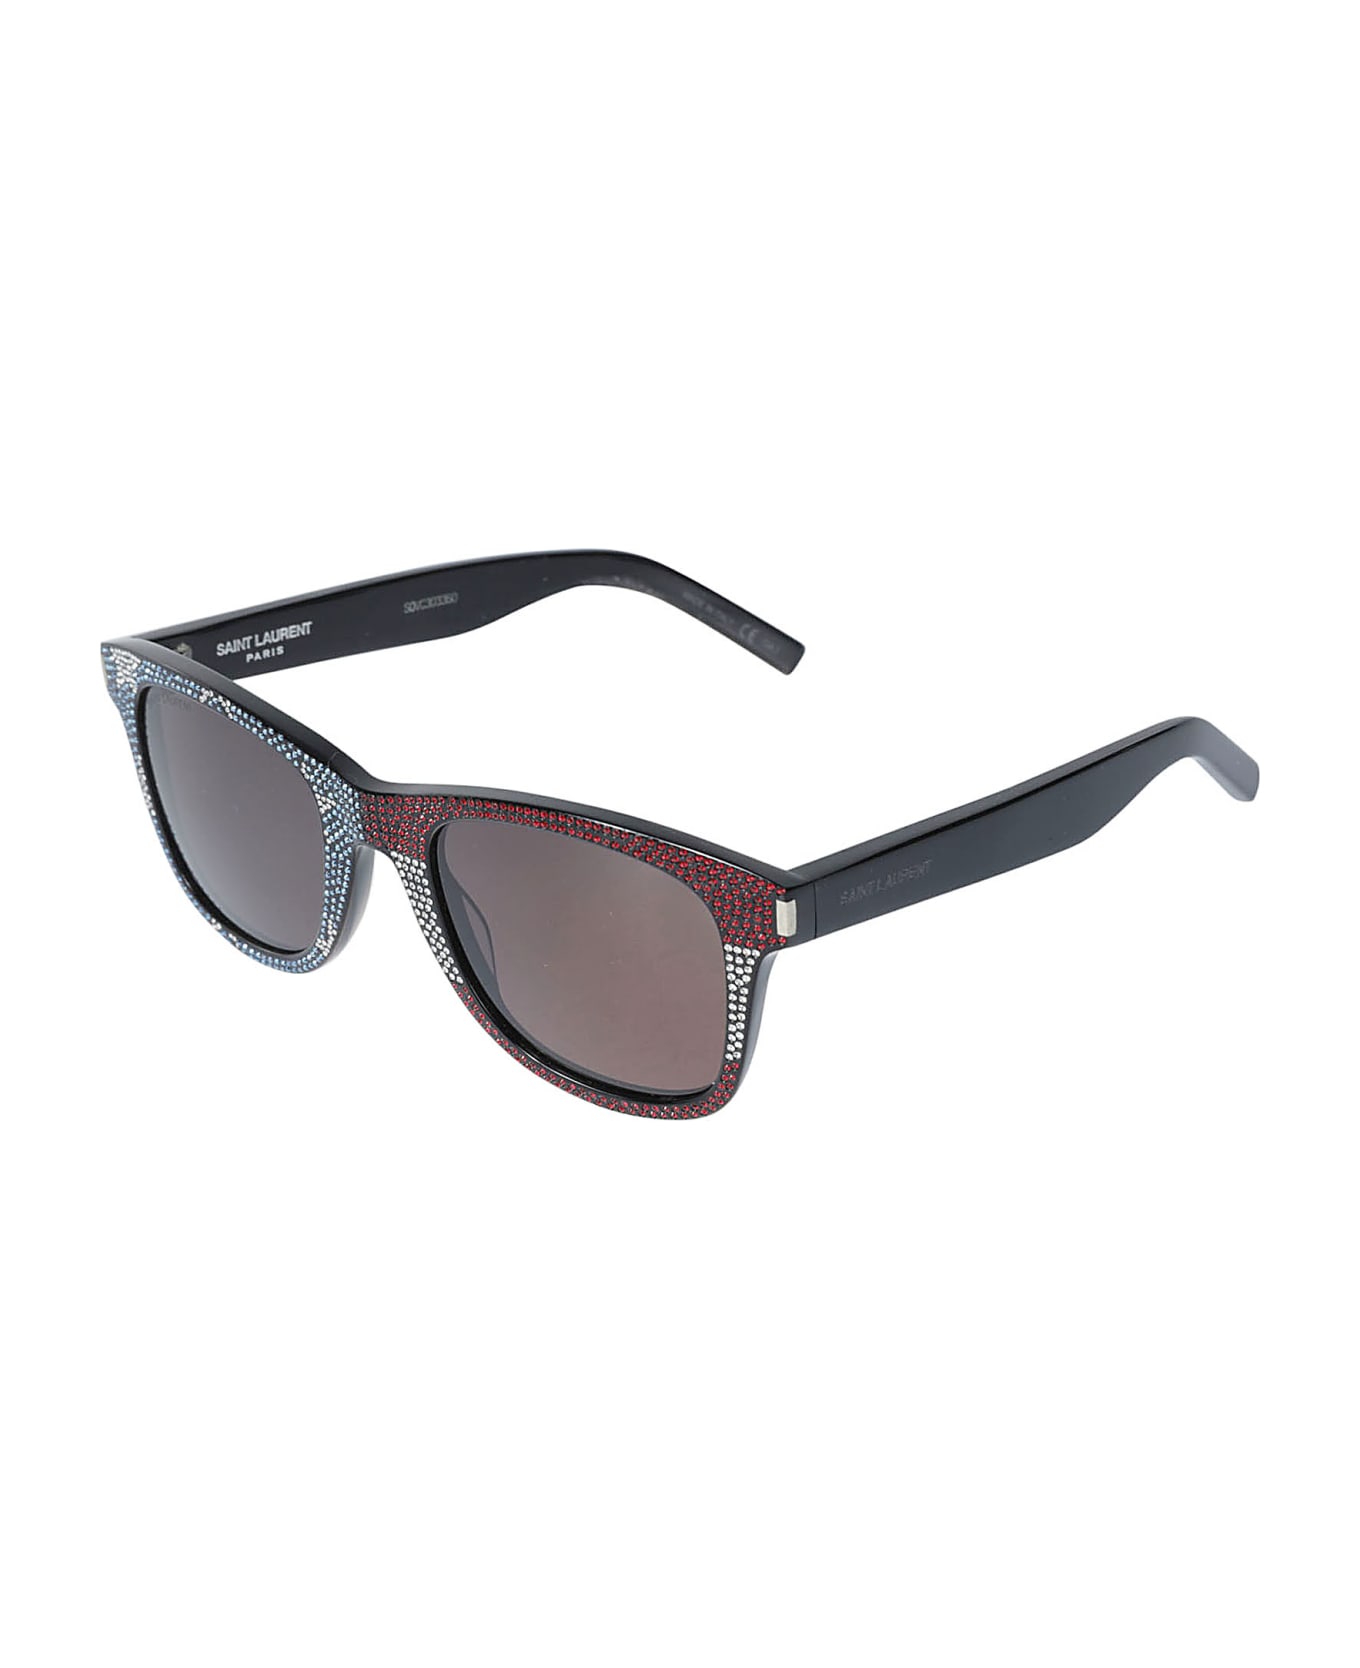 Saint Laurent Eyewear Square Frame Studded Sunglasses - Black/Grey サングラス